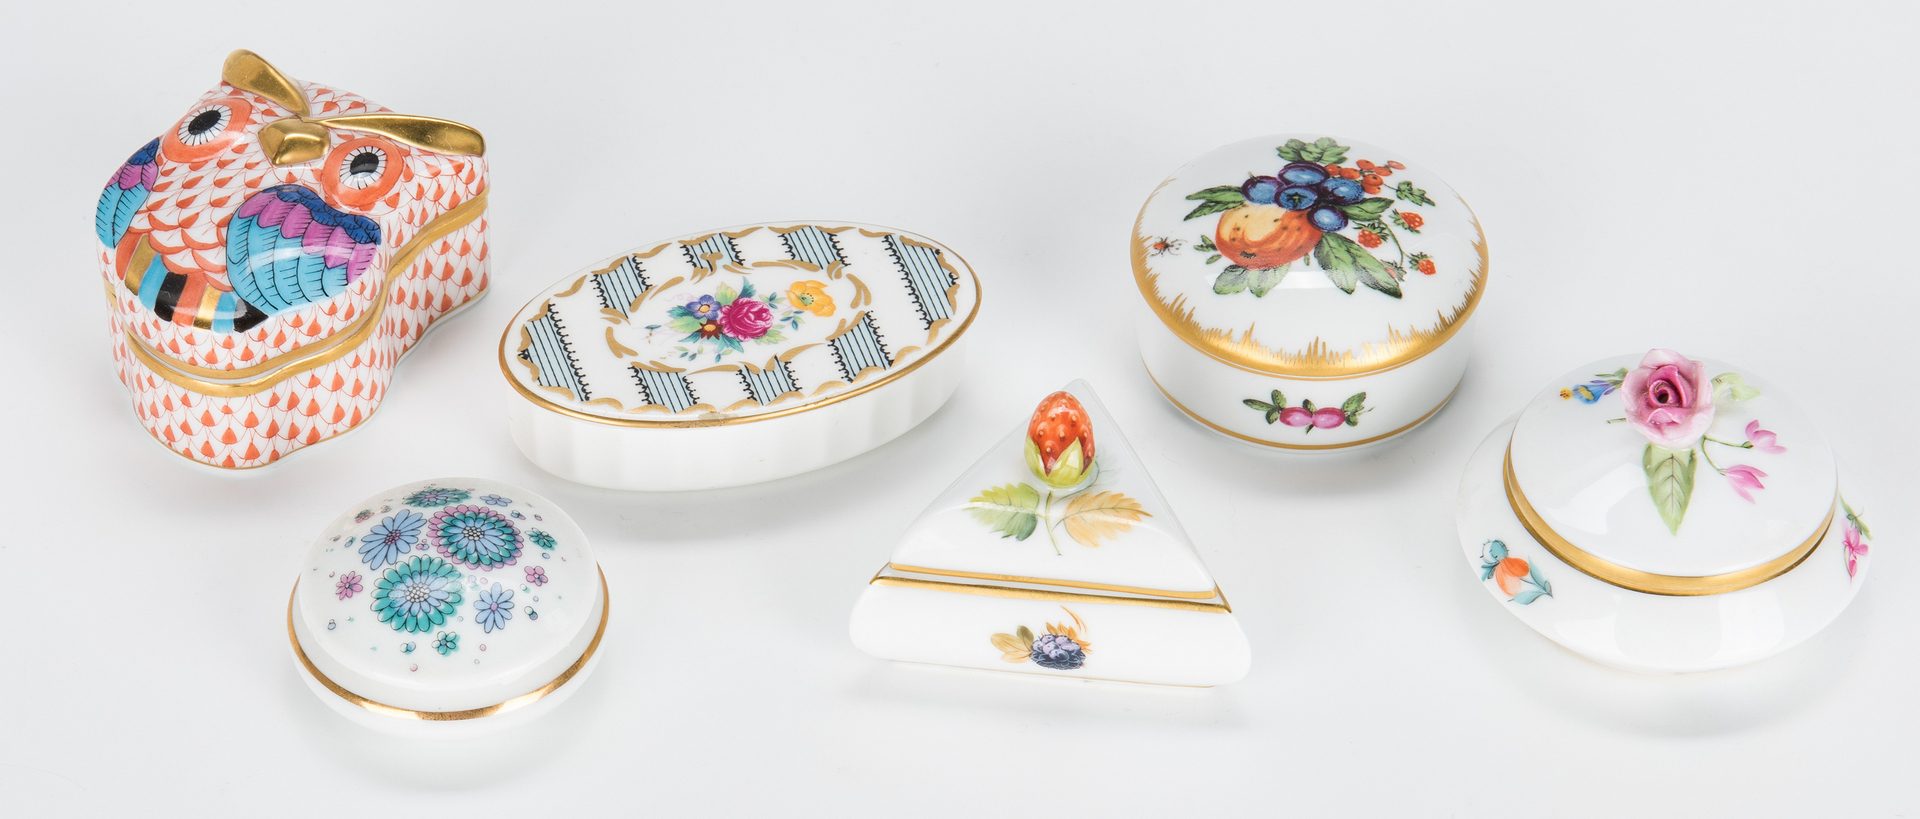 Lot 333: 21 Assorted American & European Porcelain Items